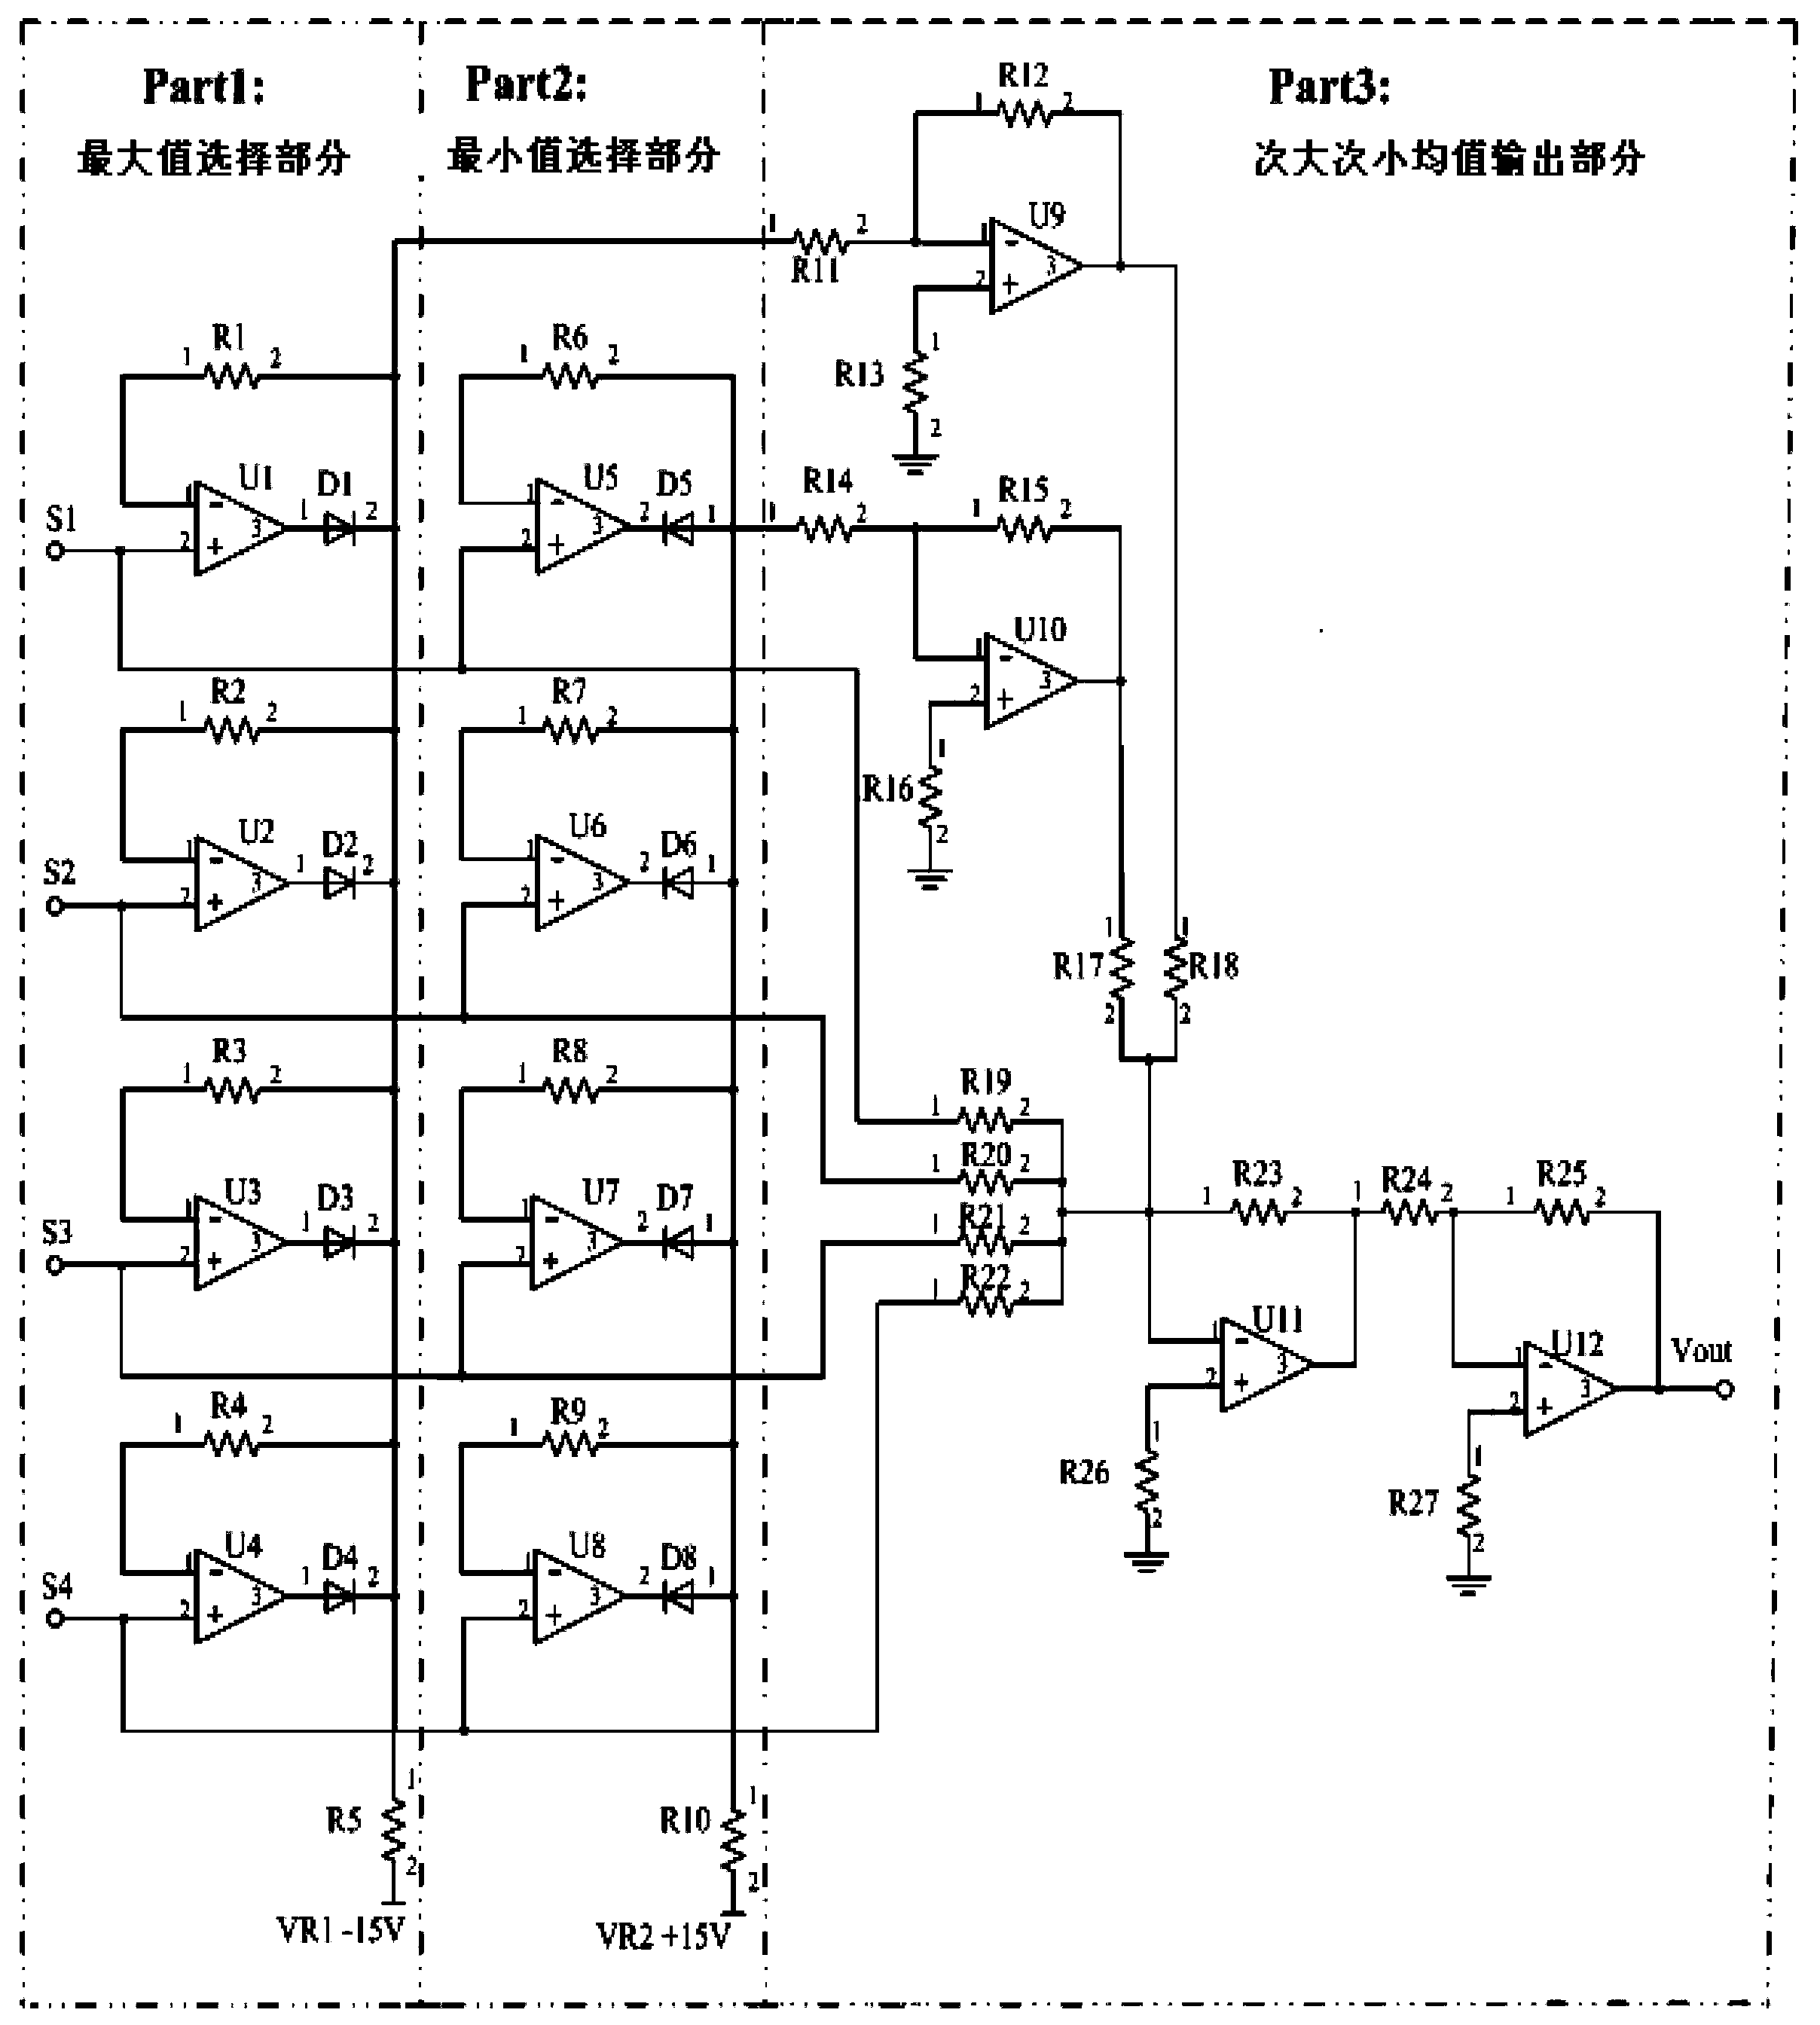 A four-redundancy simulation signal hardware voting circuit